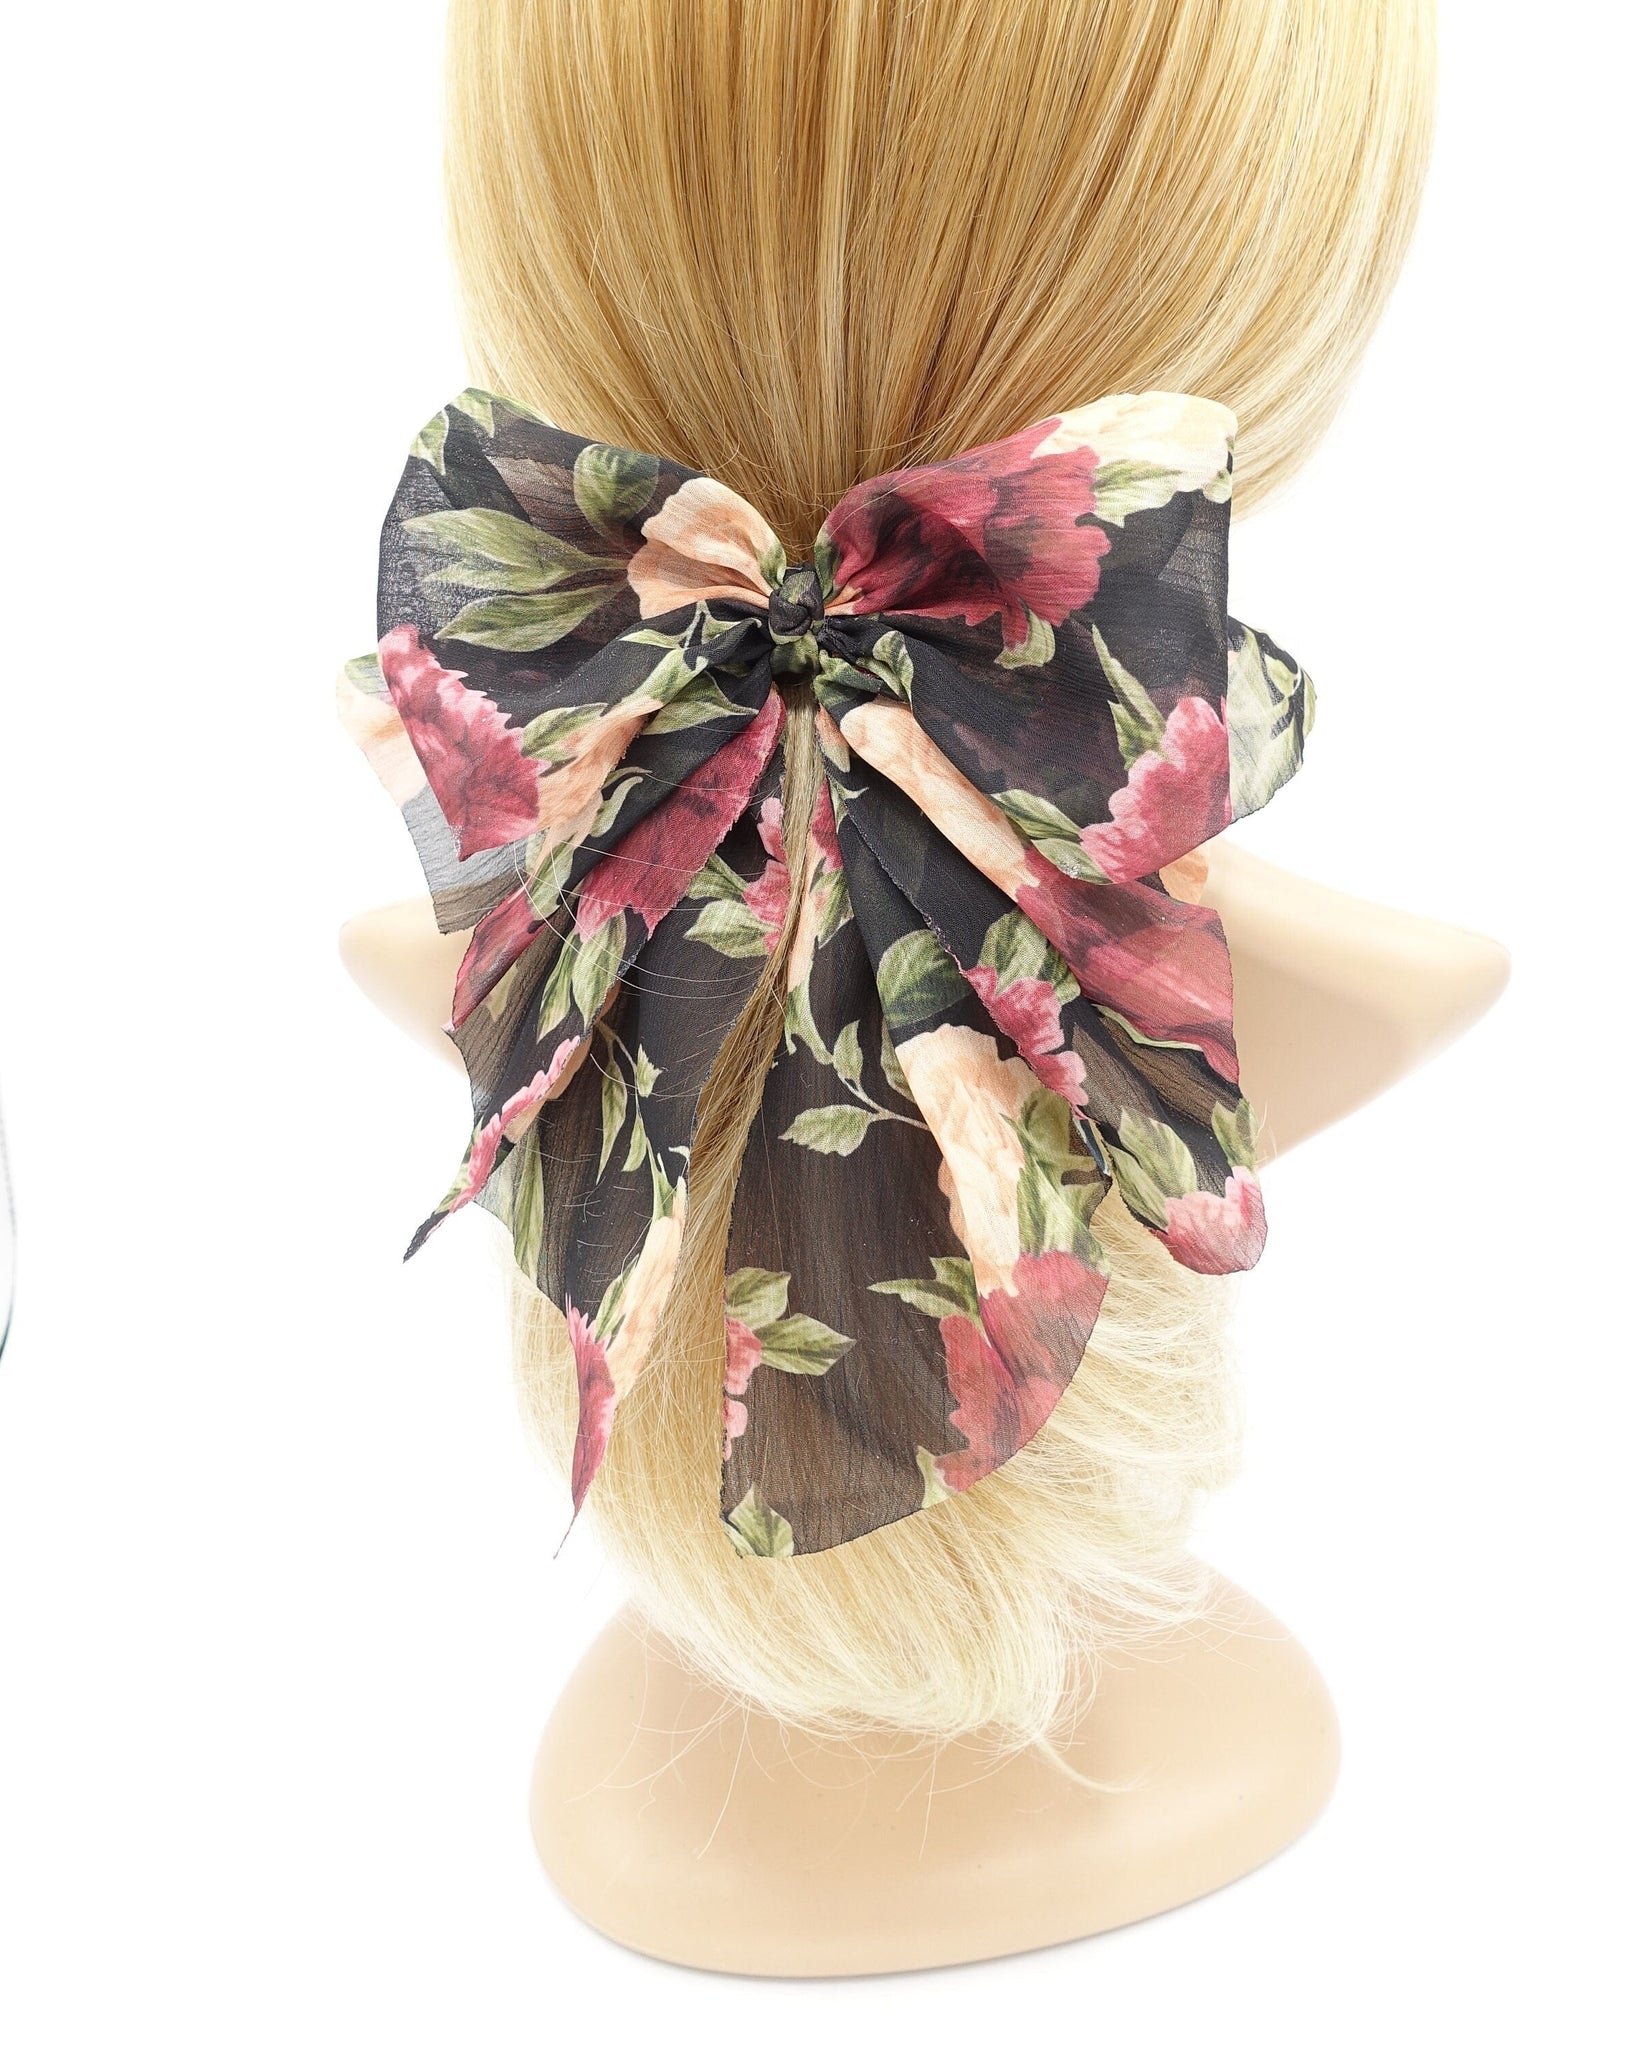 veryshine.com Barrette (Bow) big floral chiffon hair bow feminine hair accessory